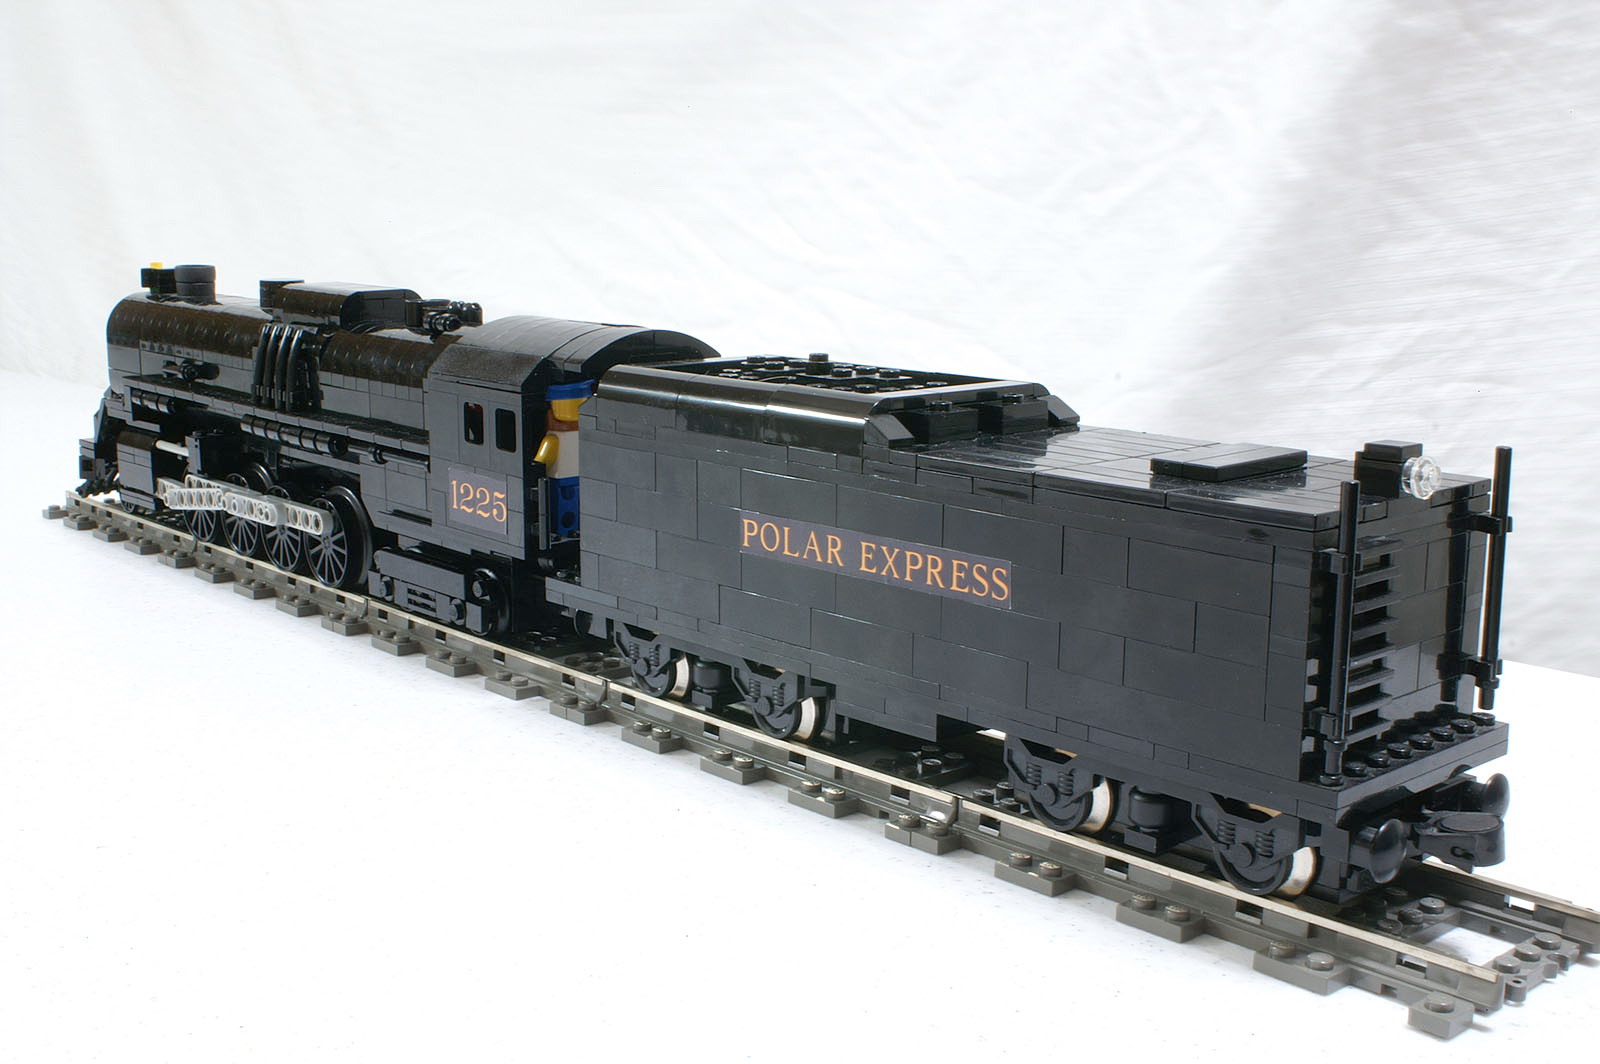 Polar Express locomotive